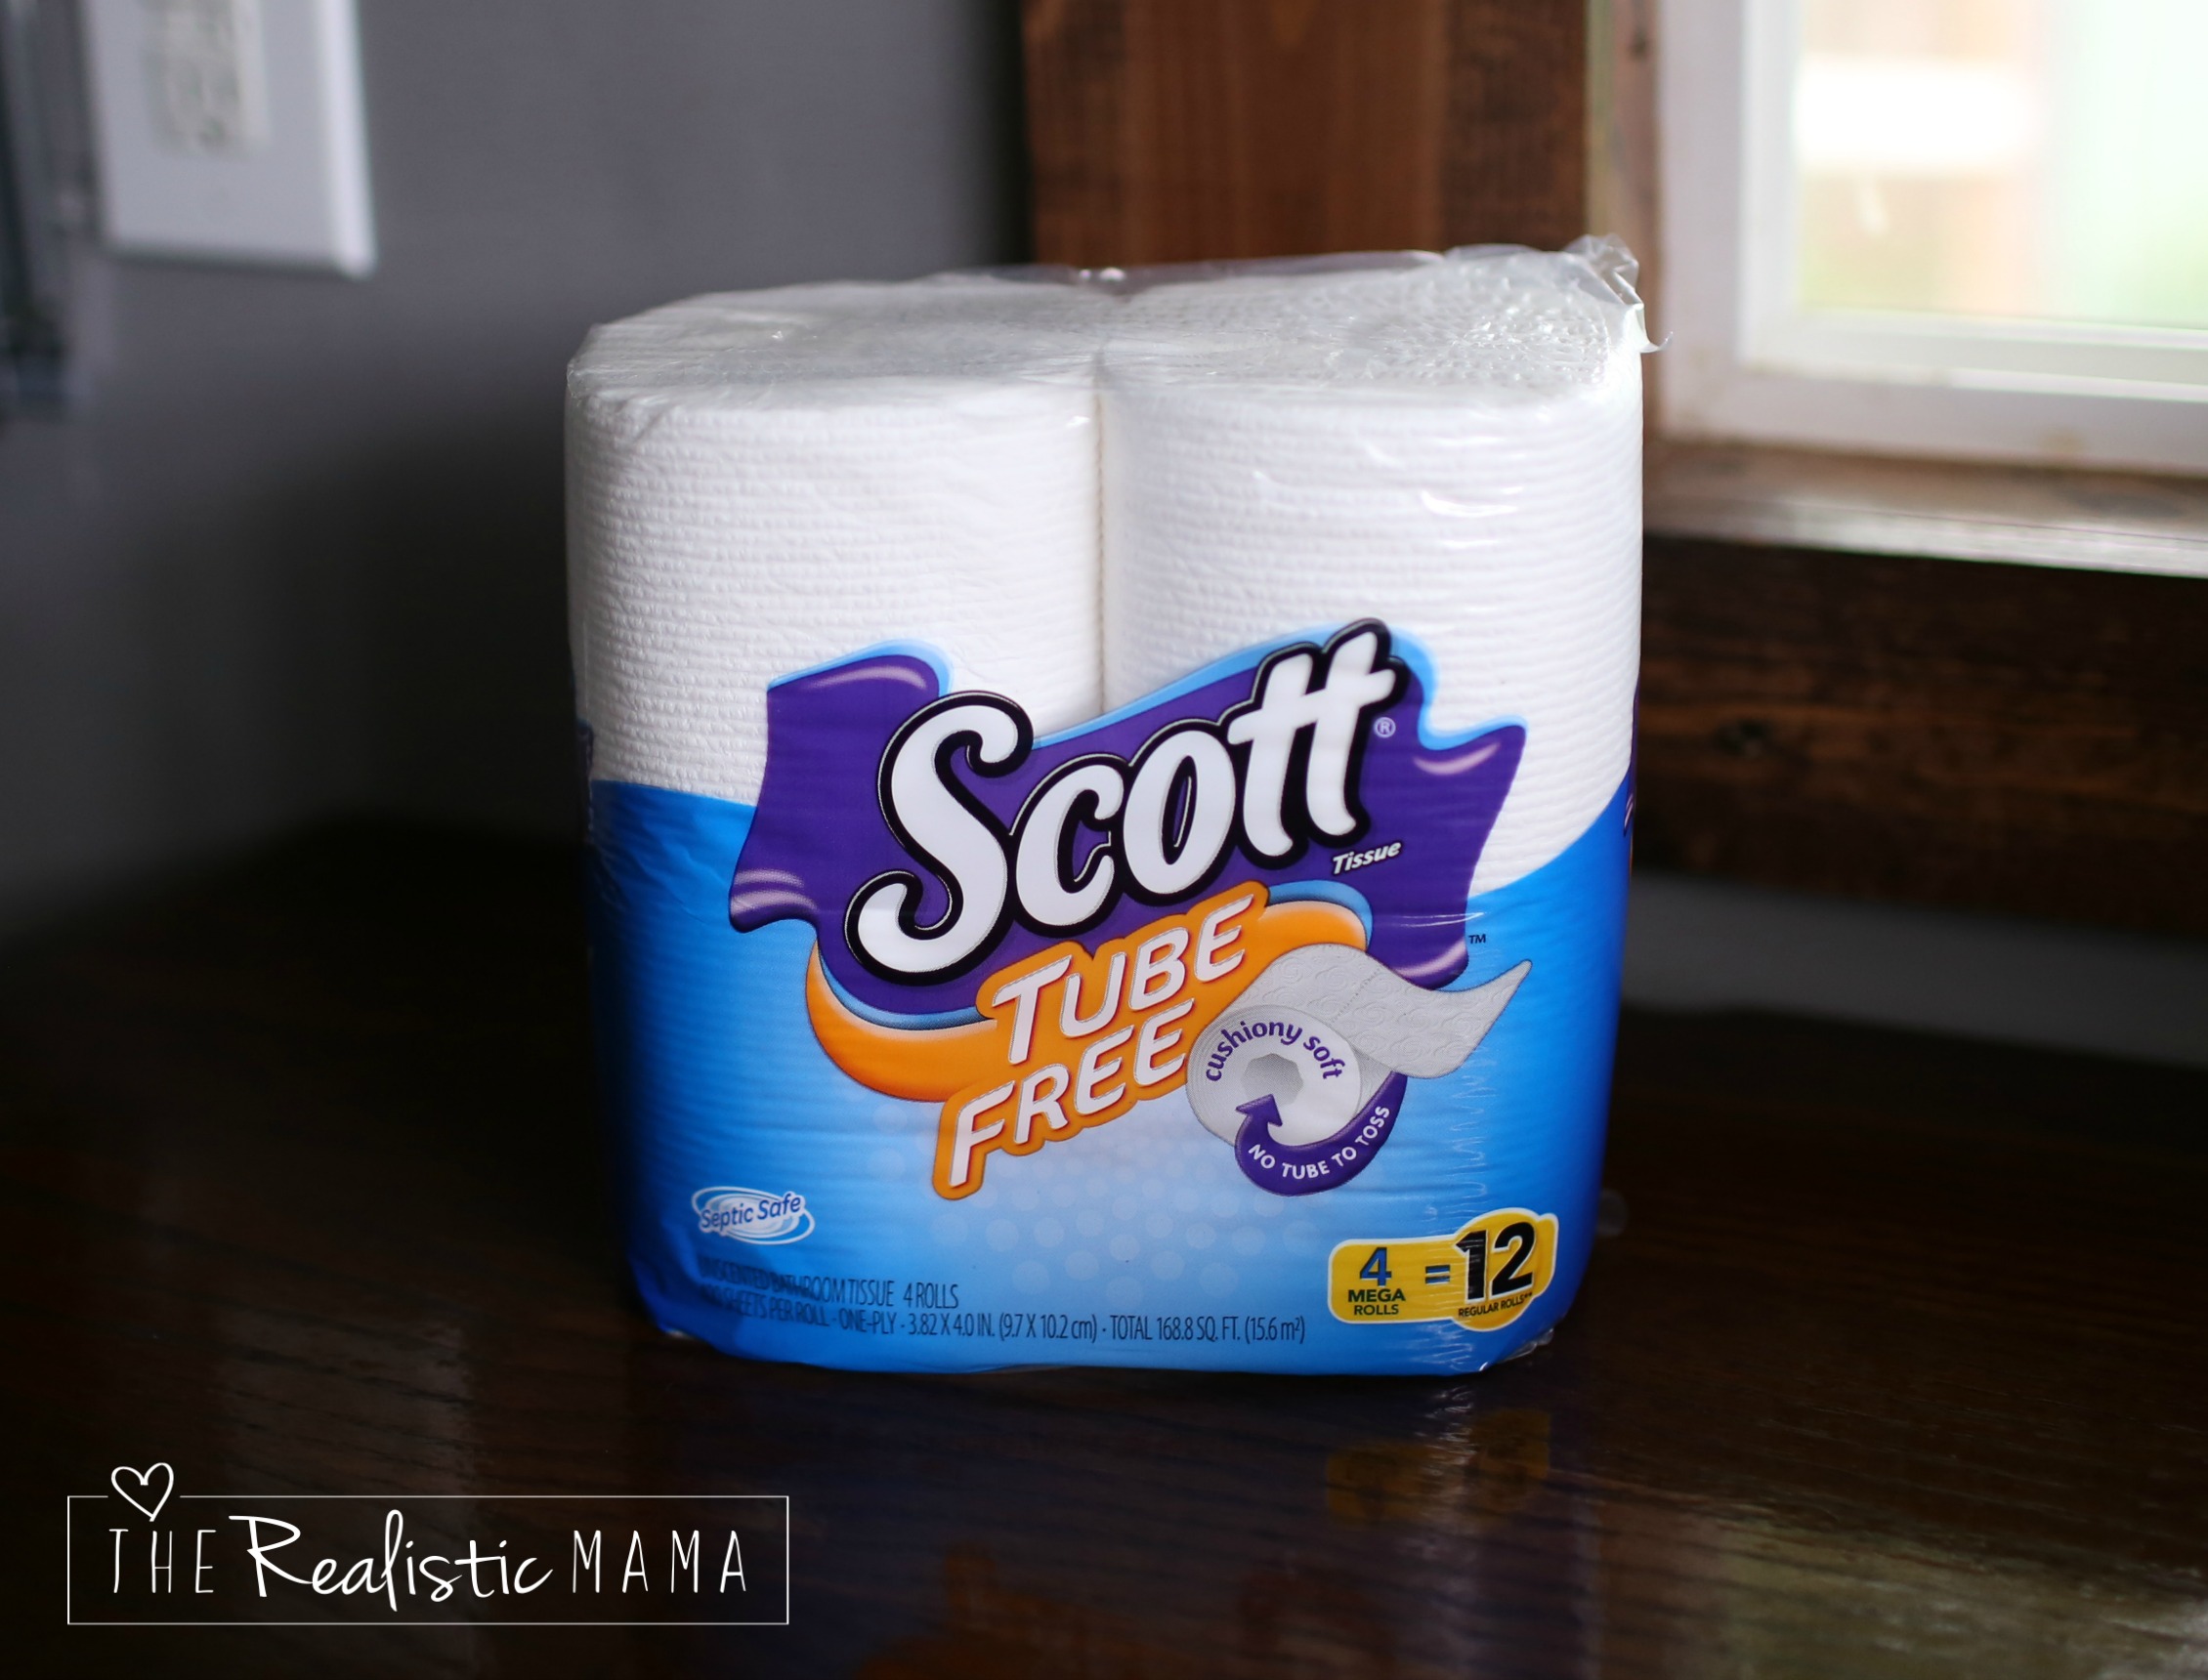 Scott Tube-Free toilet paper